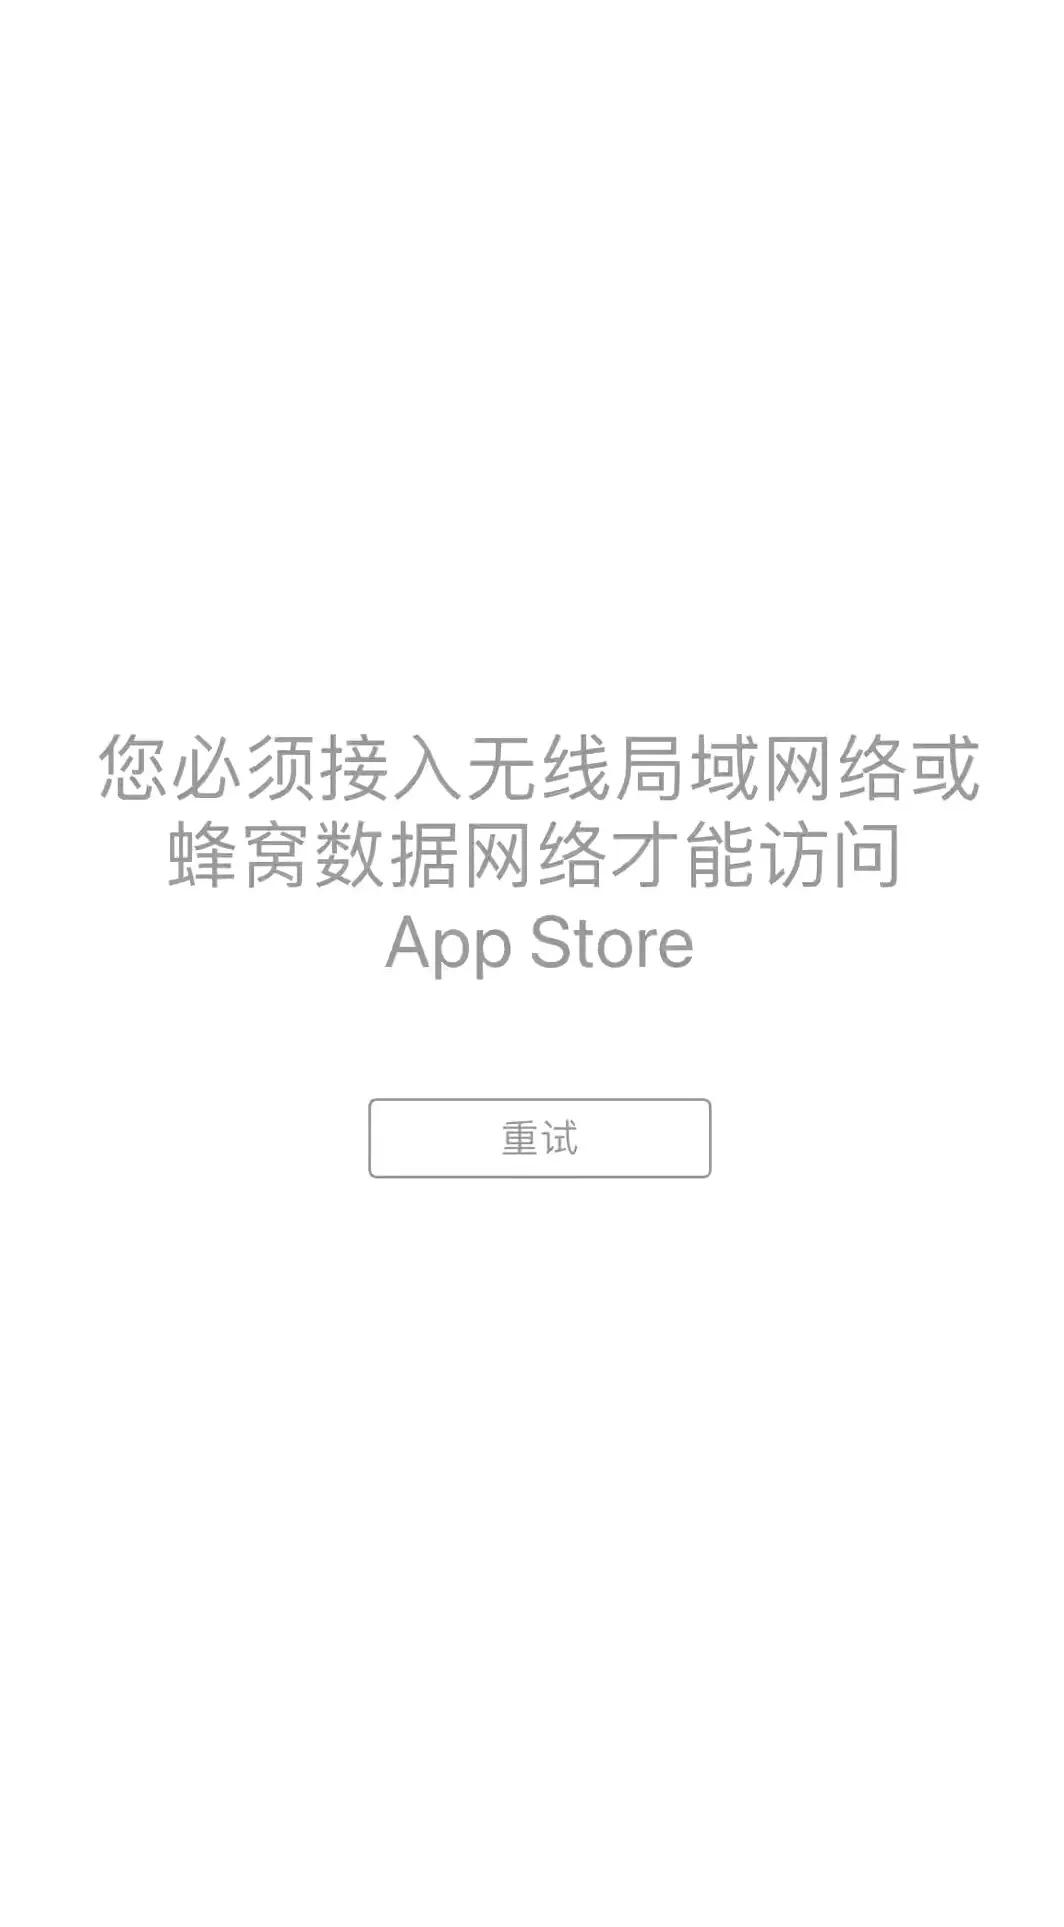 iOS15 升级后APP Store无法使用解决方法